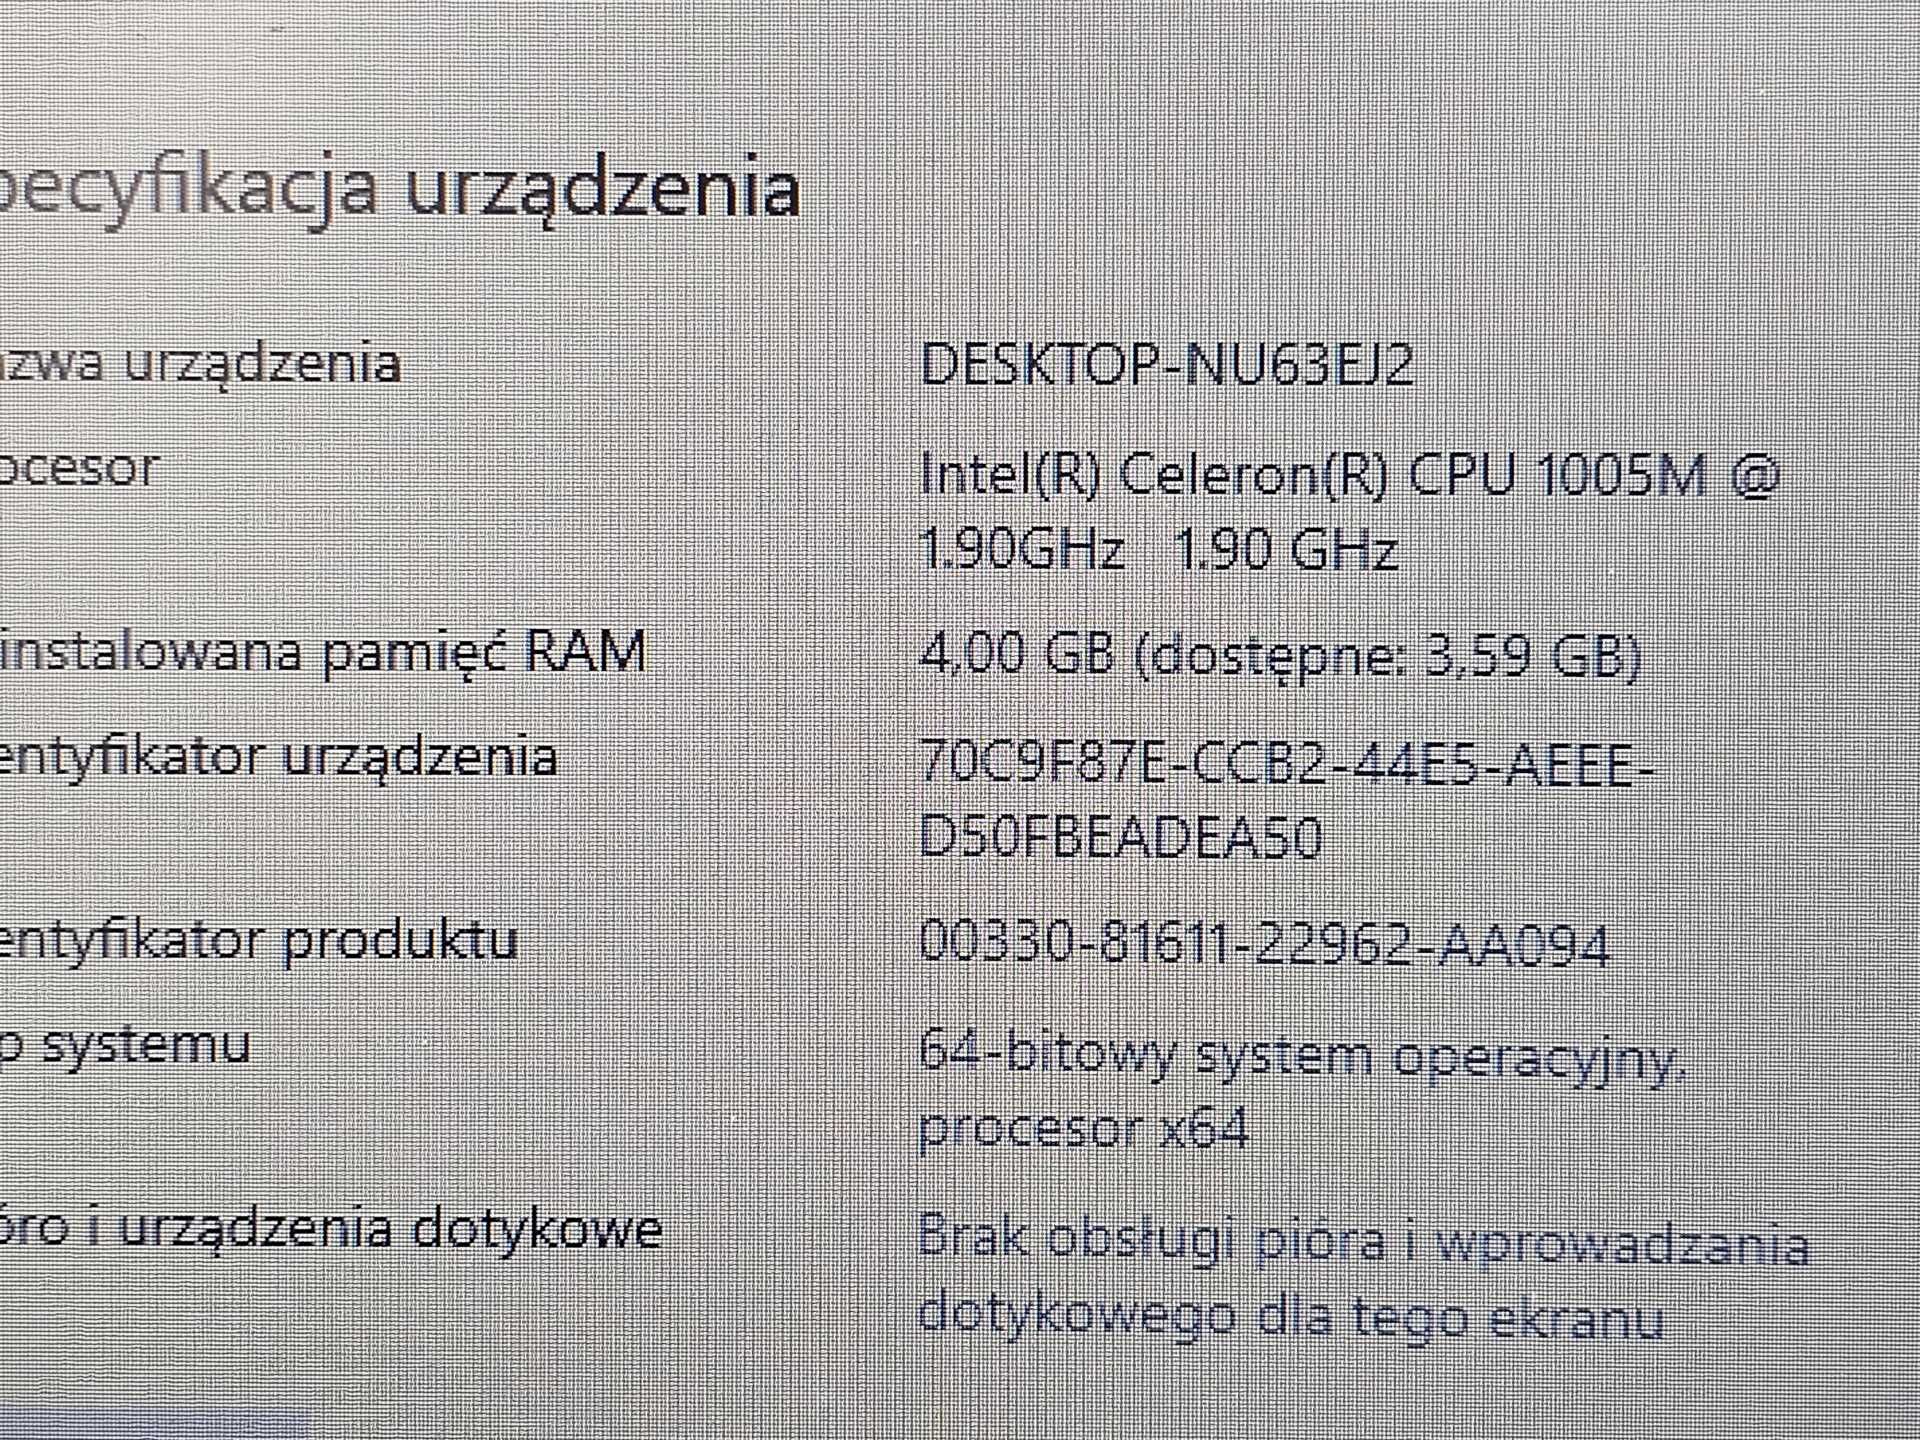 Laptop LENOVO B590, Zasilacz